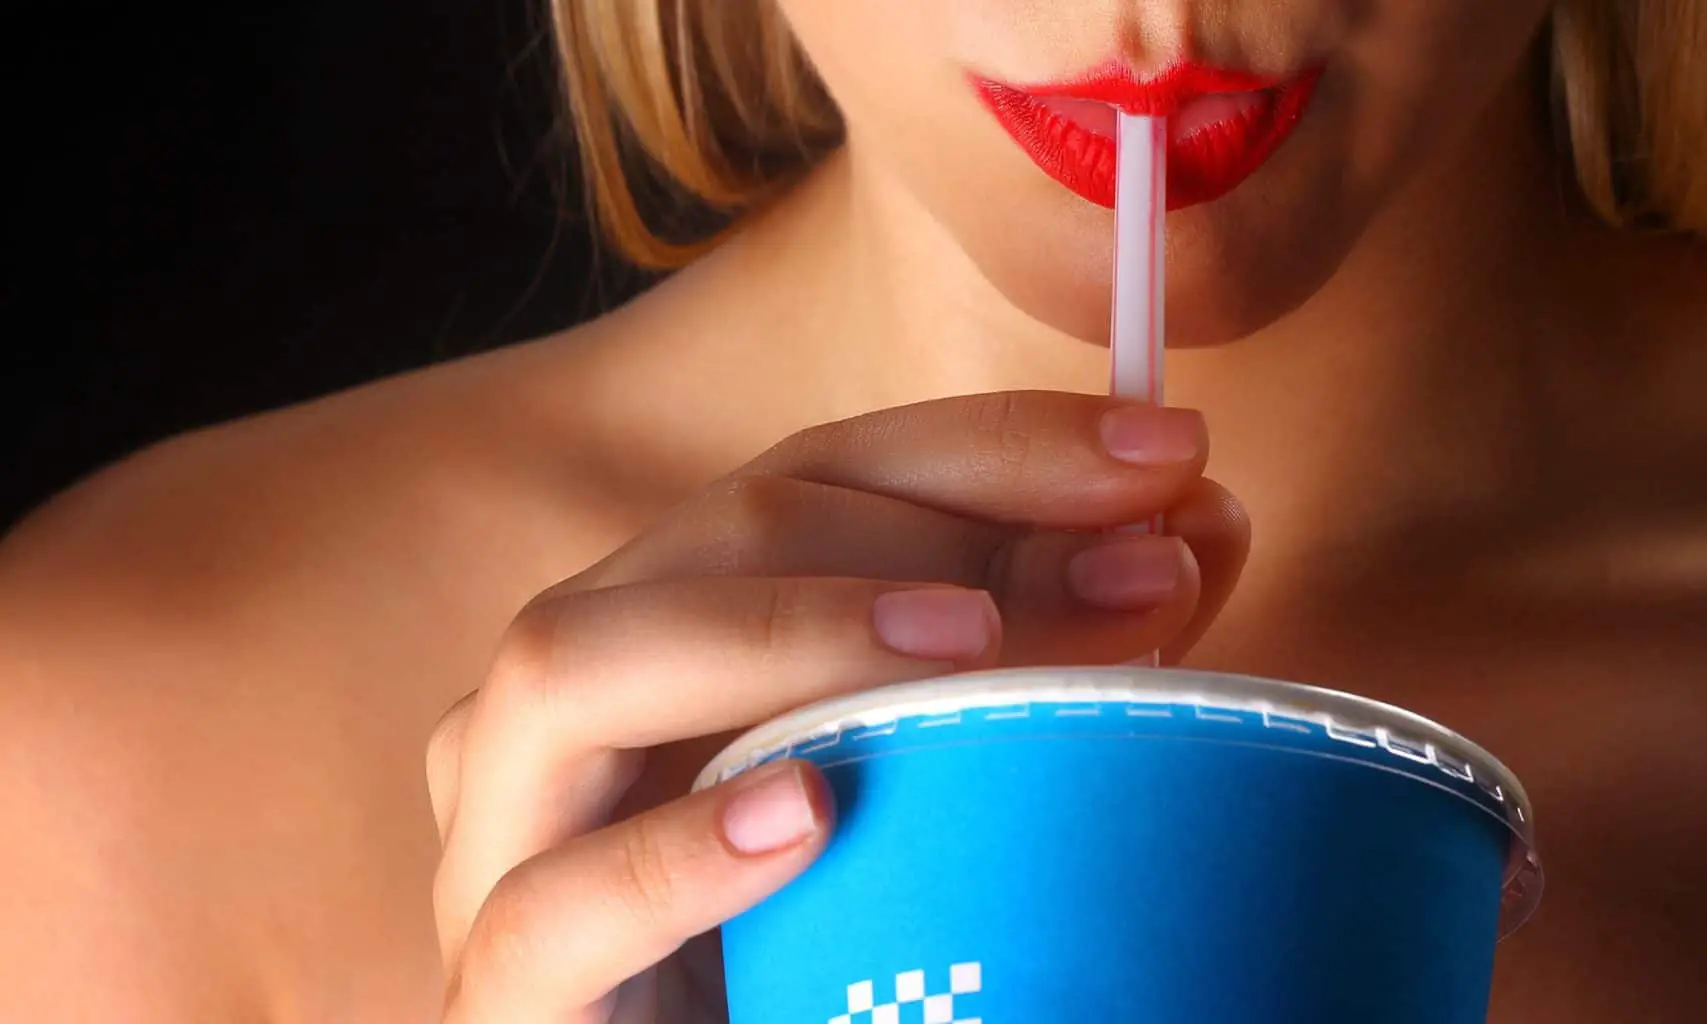 plastic-straw-woman-red-lips